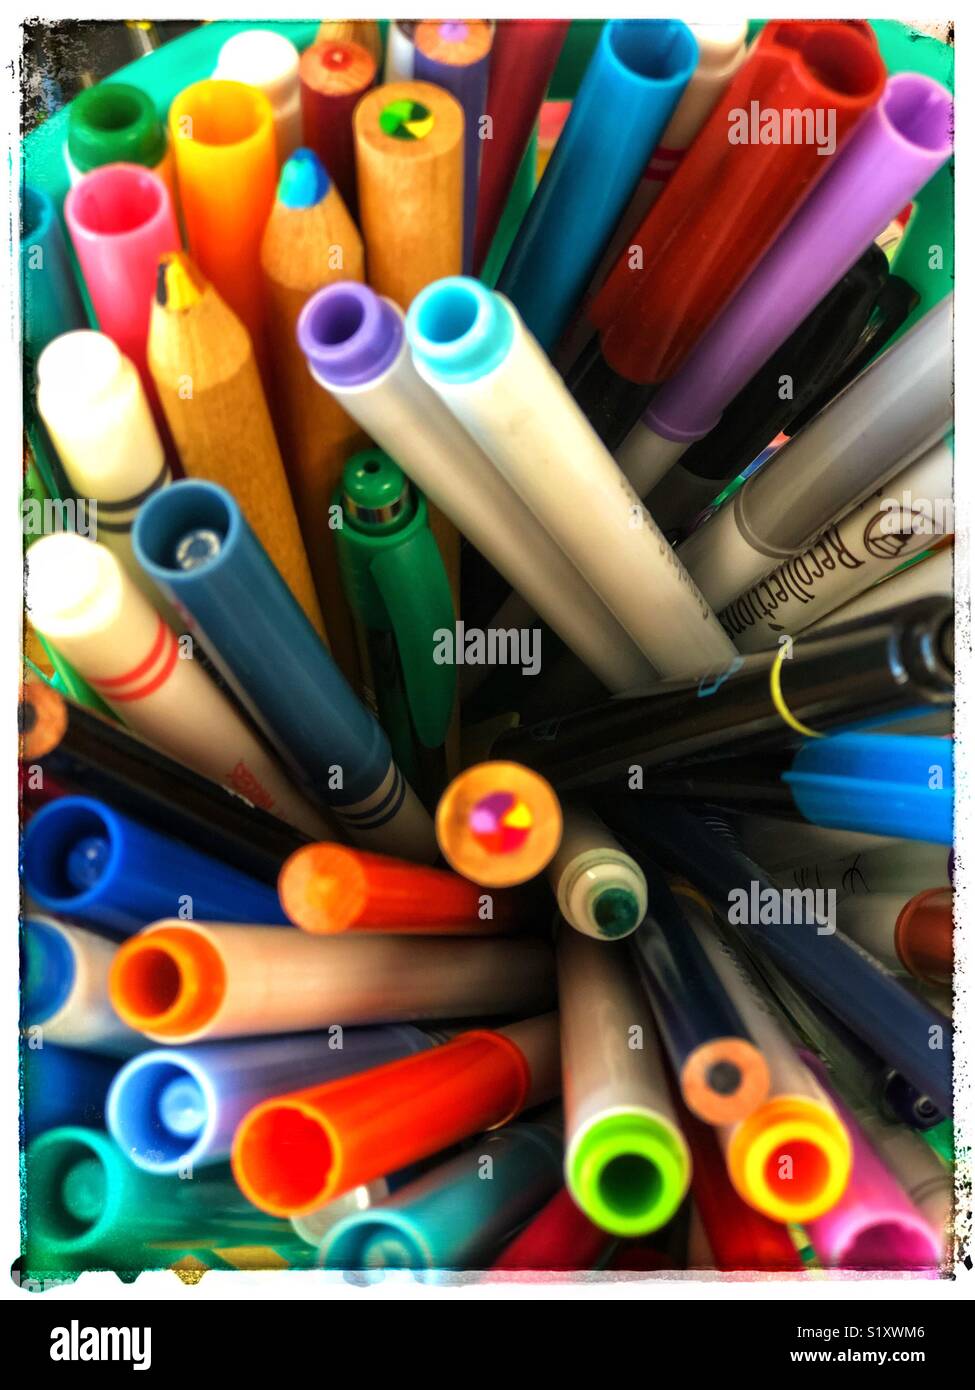 https://c8.alamy.com/comp/S1XWM6/colored-markers-in-a-jar-S1XWM6.jpg